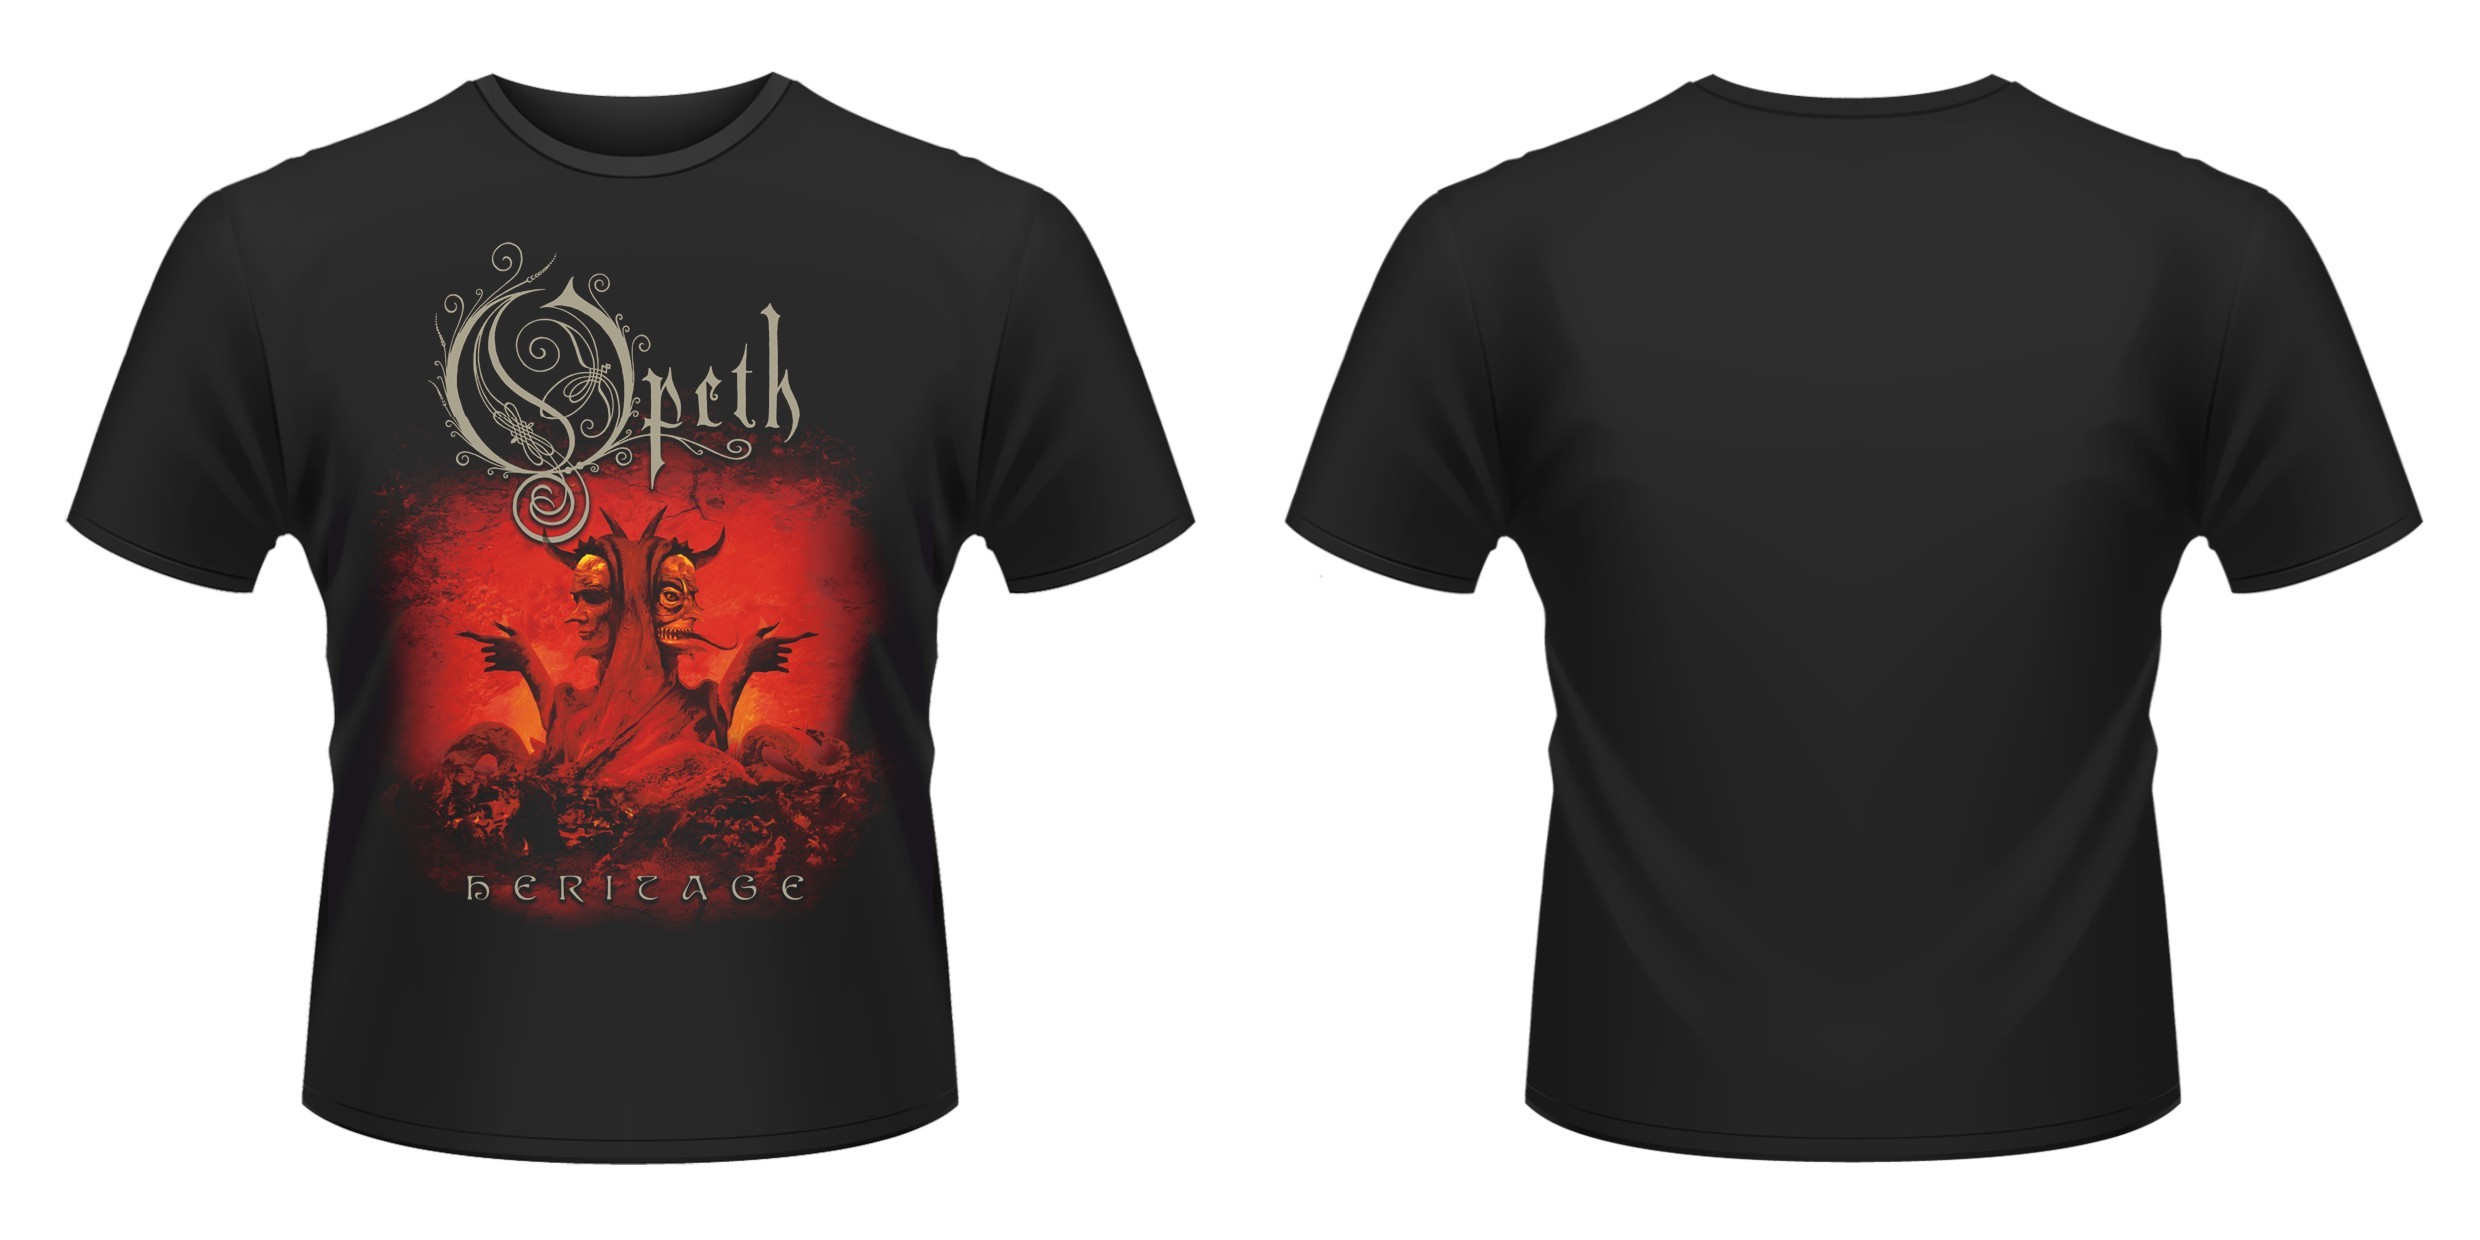 Opeth - Heritage
  - L